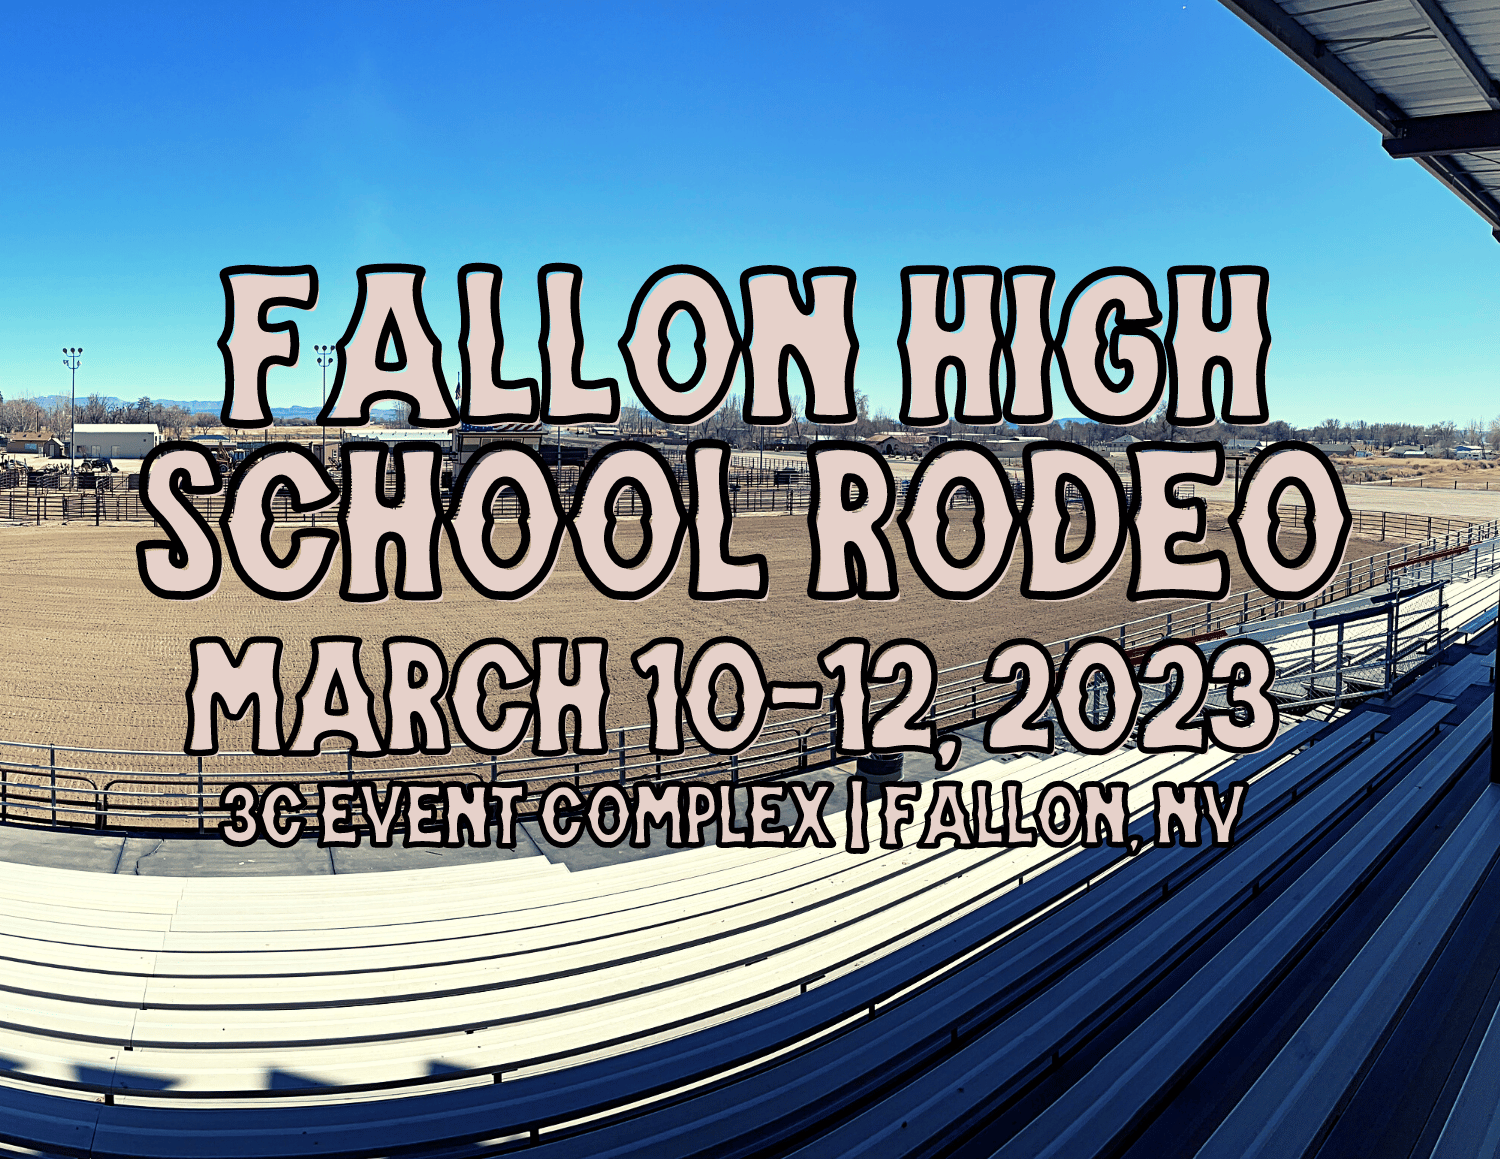 Fallon High school rodeo dates.